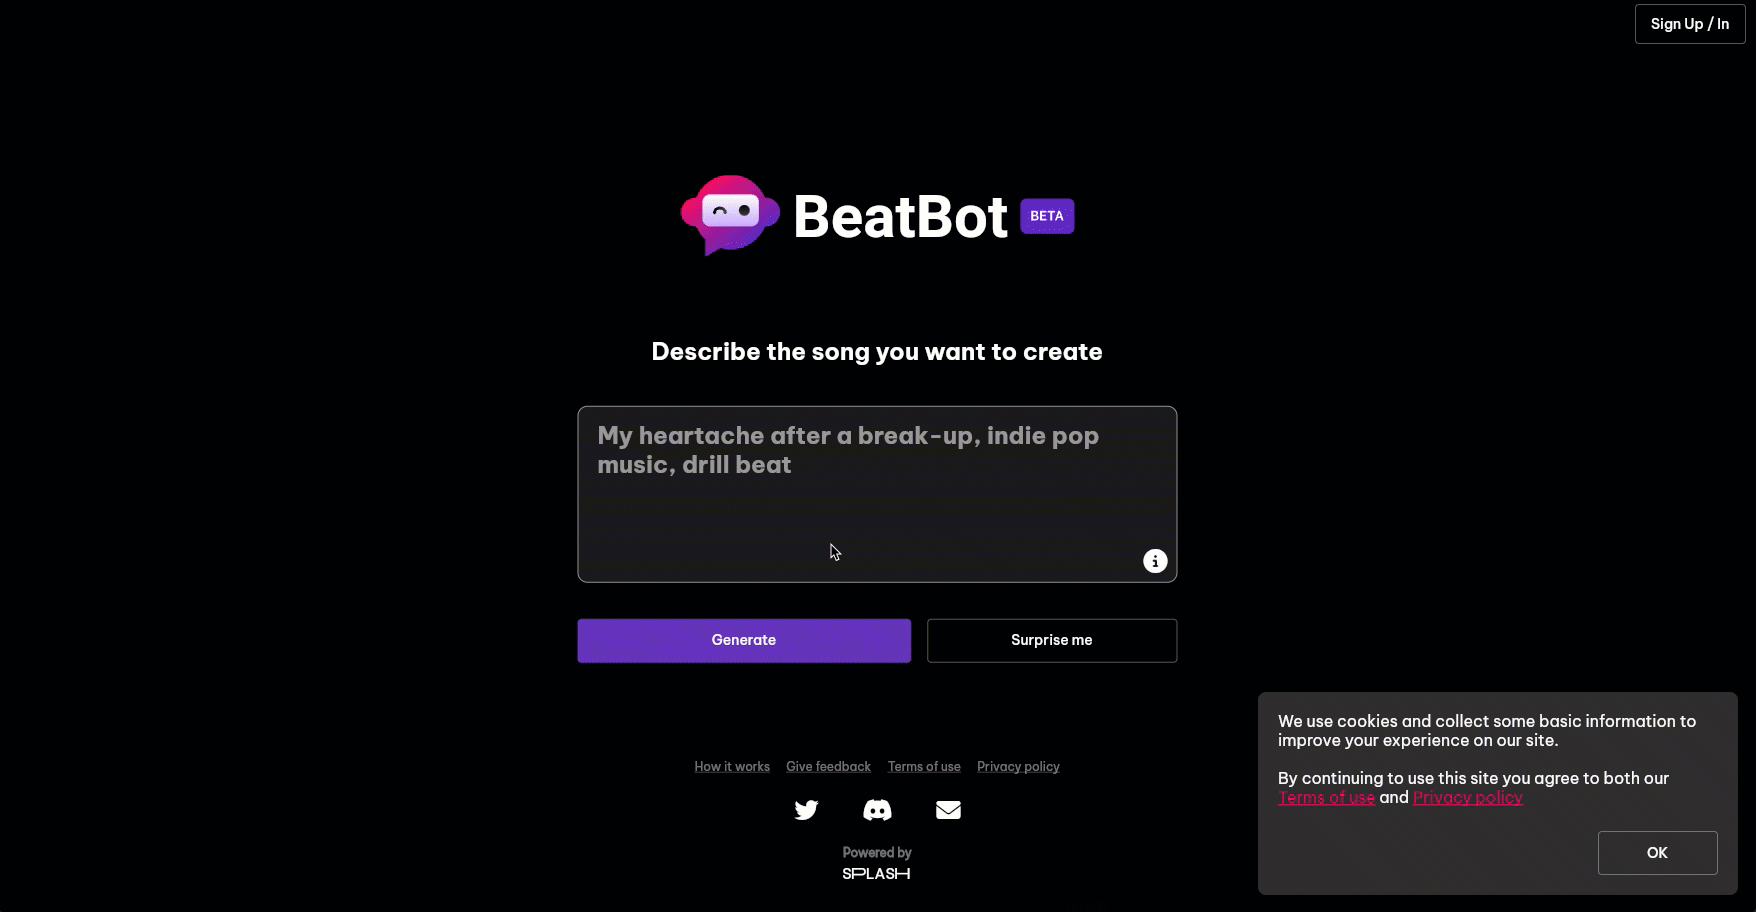 Beatbot.fm